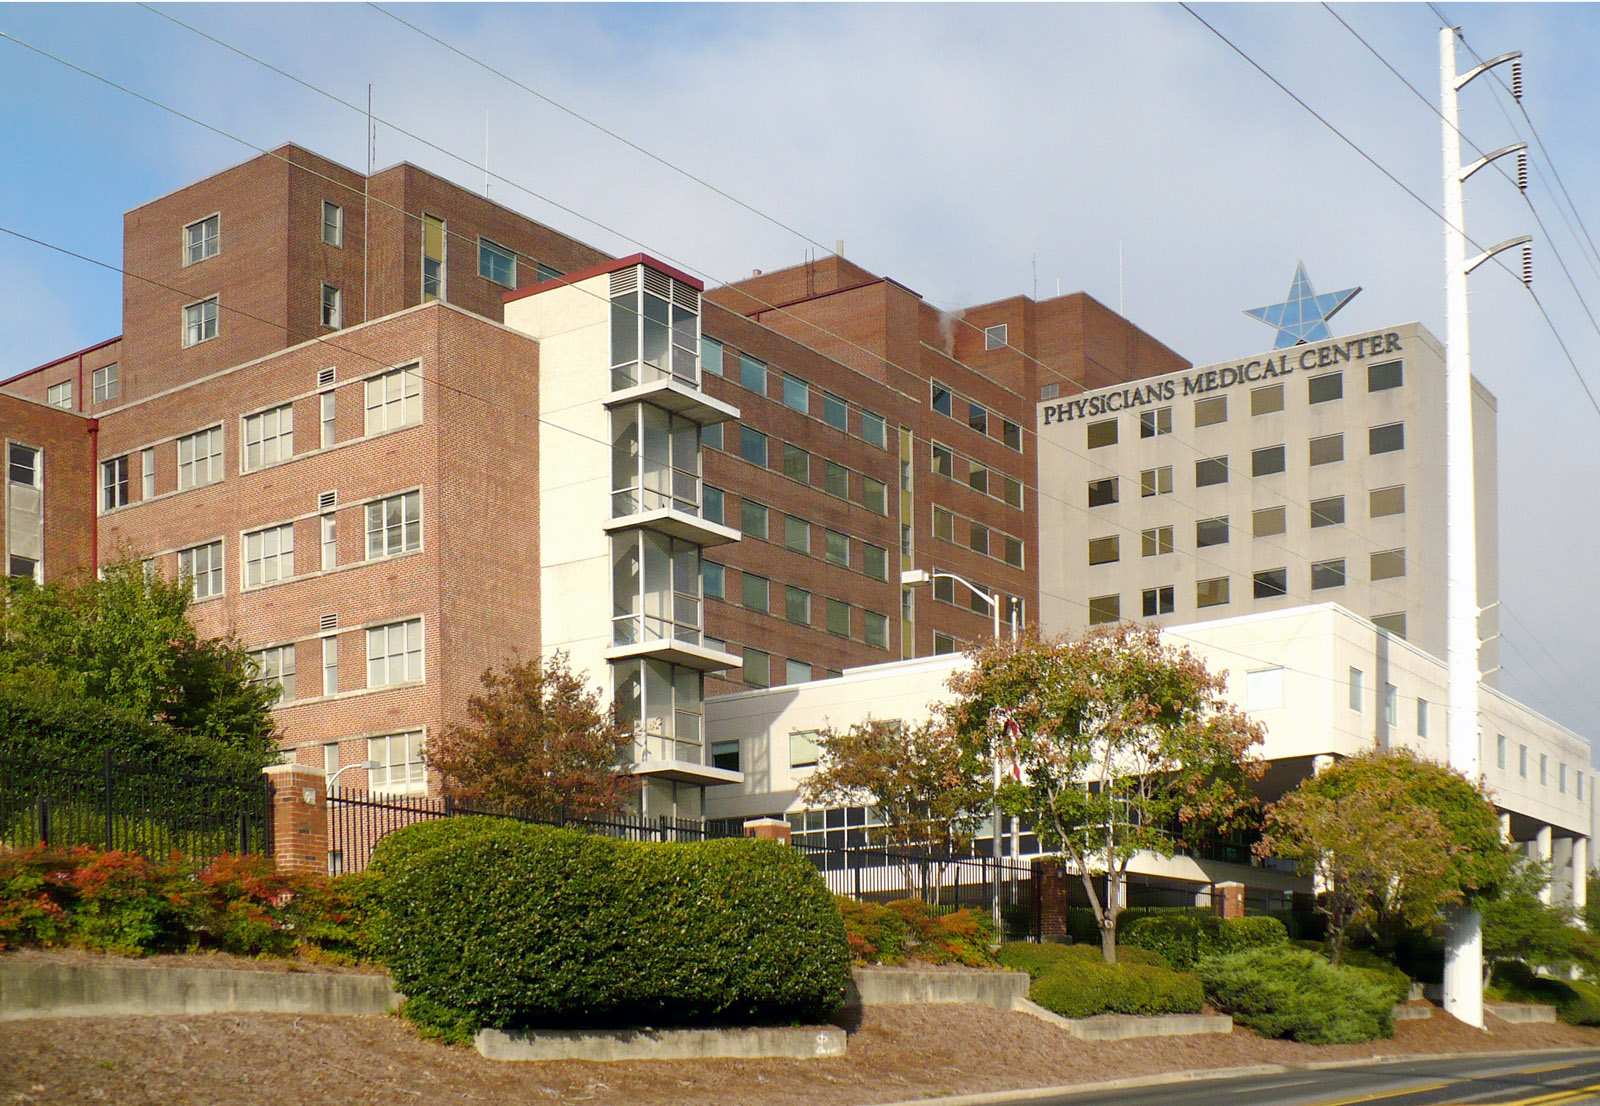 Physicians Medical Center